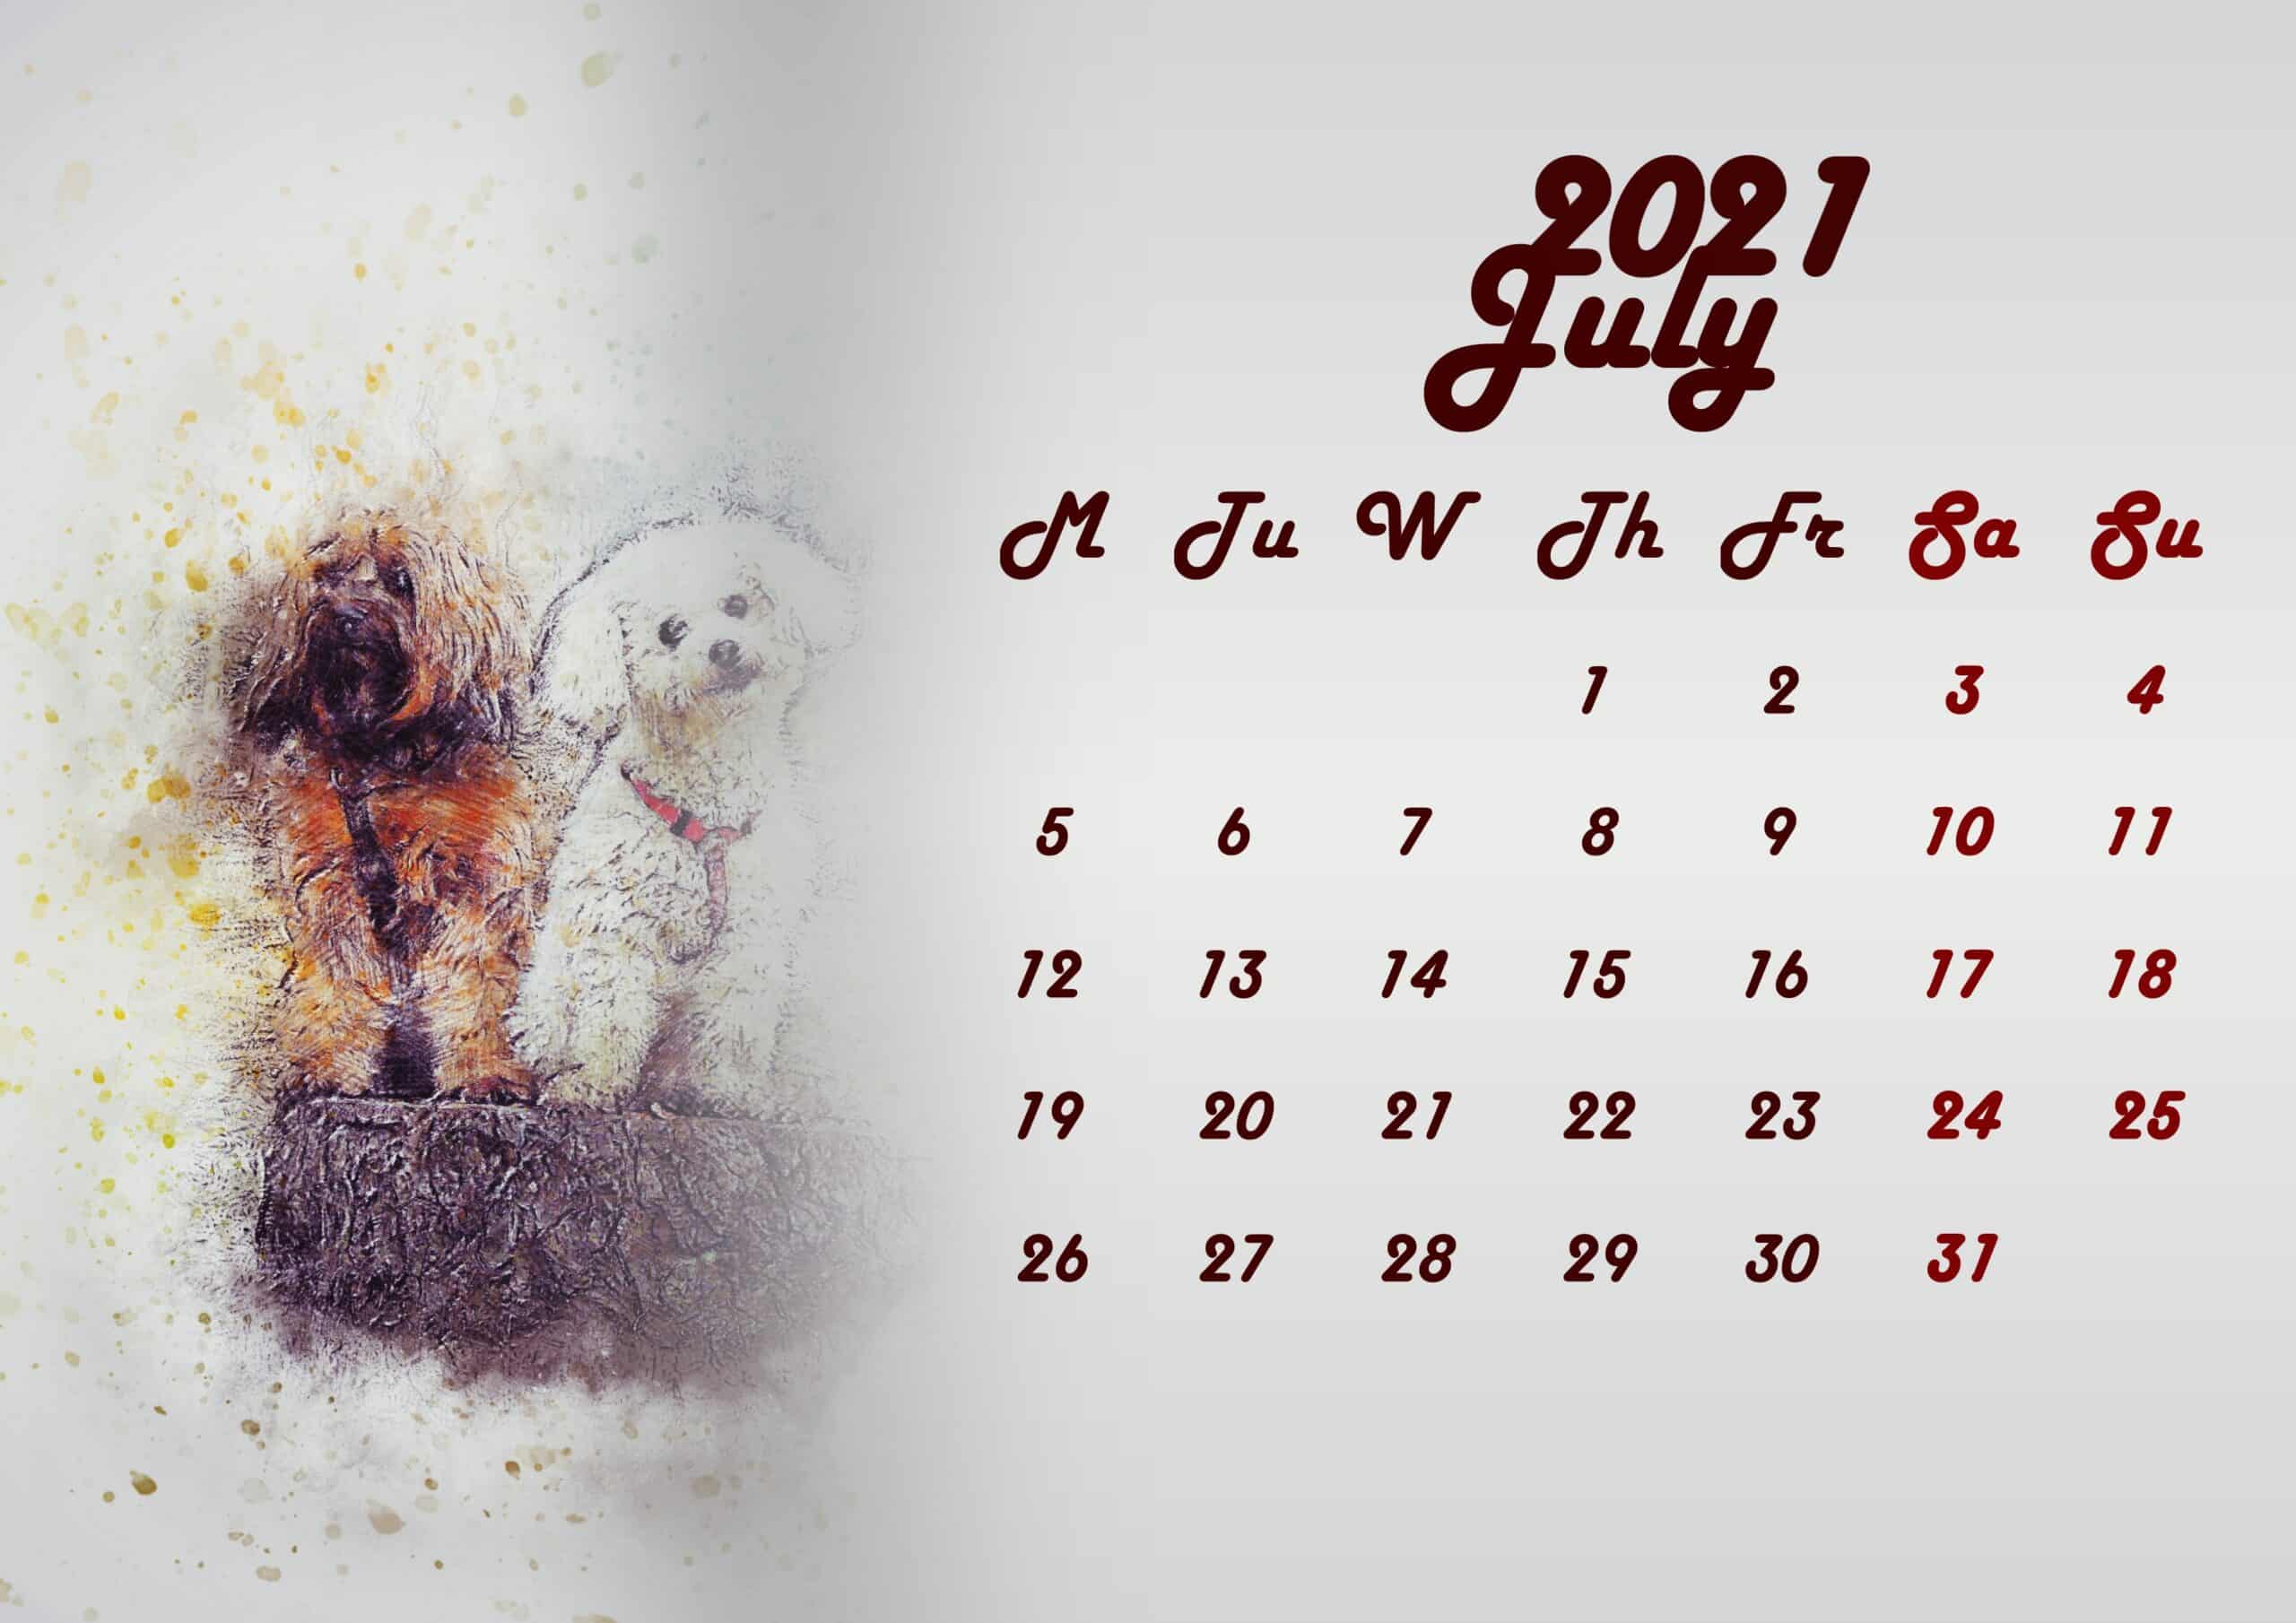 July 2021 Printable Calendar